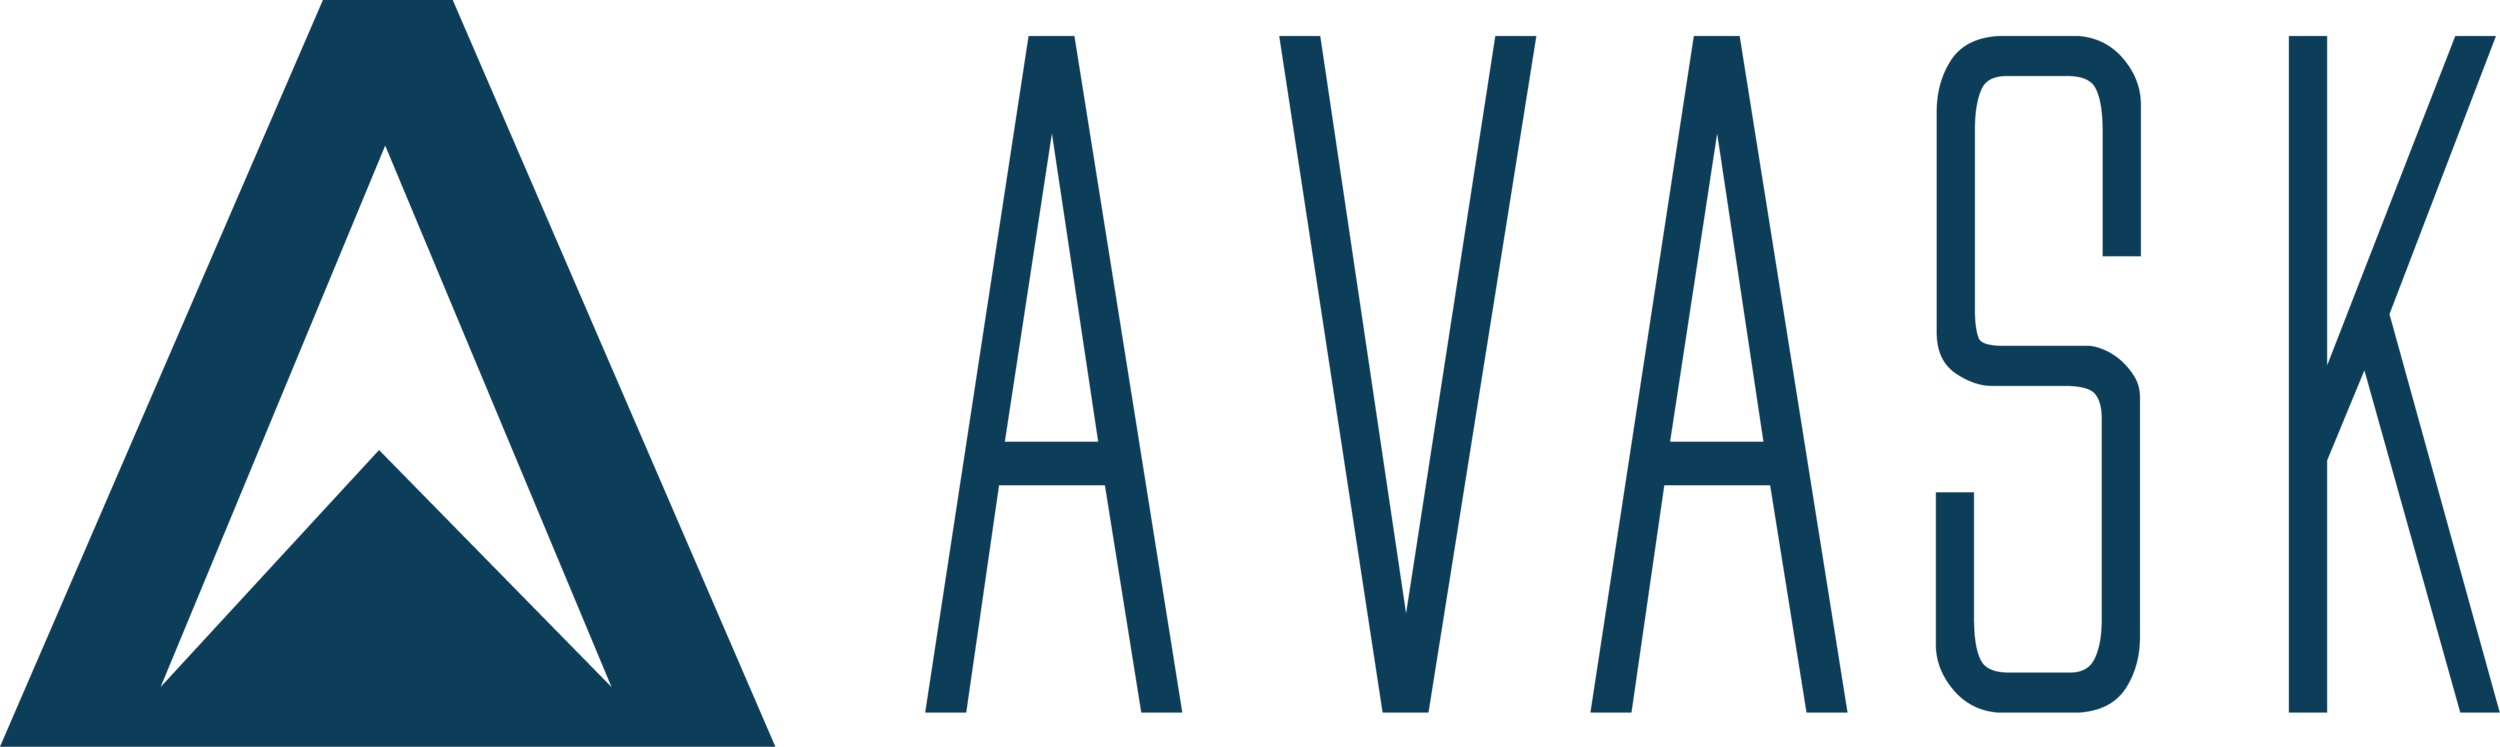 Avask Logo |